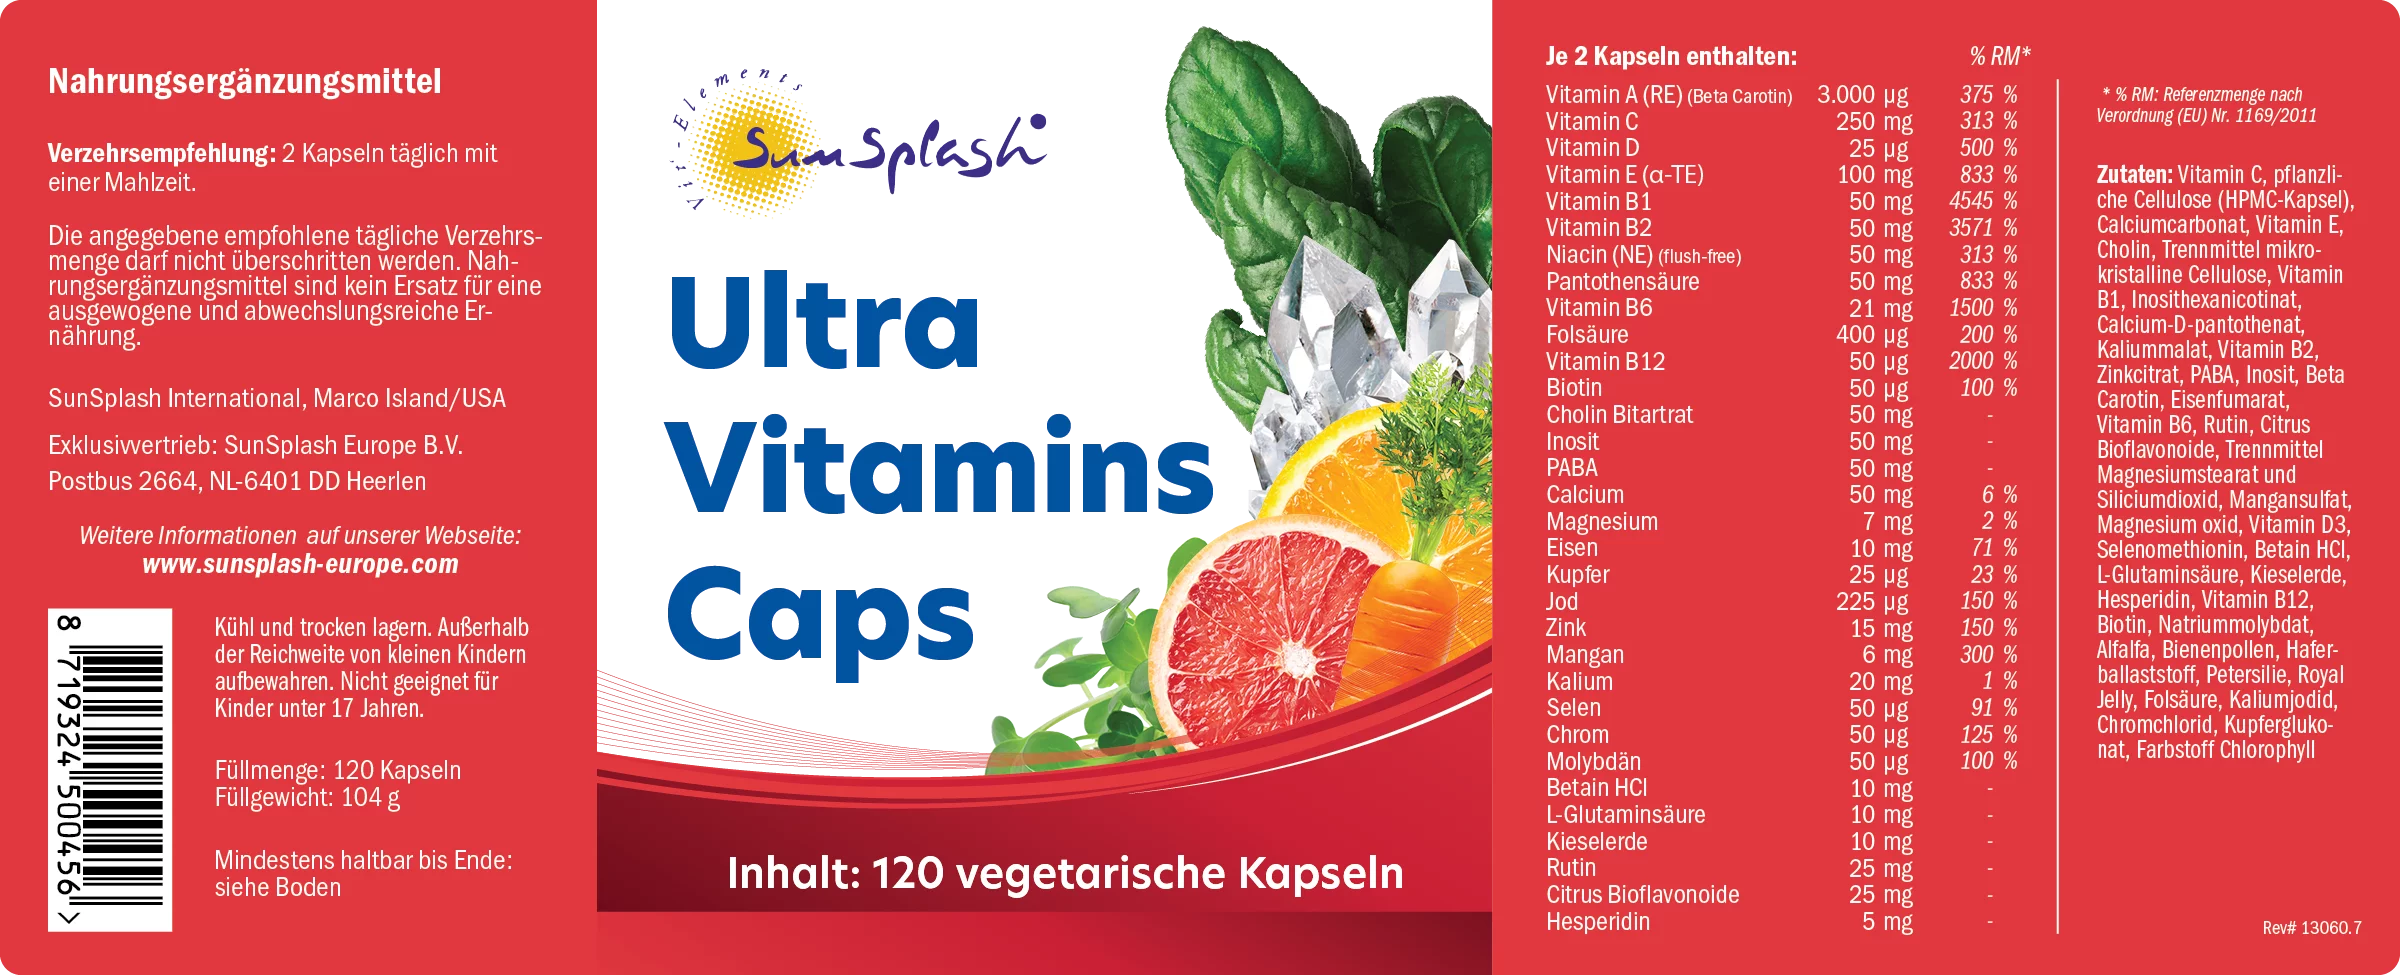 Ultra Vitamins Caps  (120 veg. Kaps.)